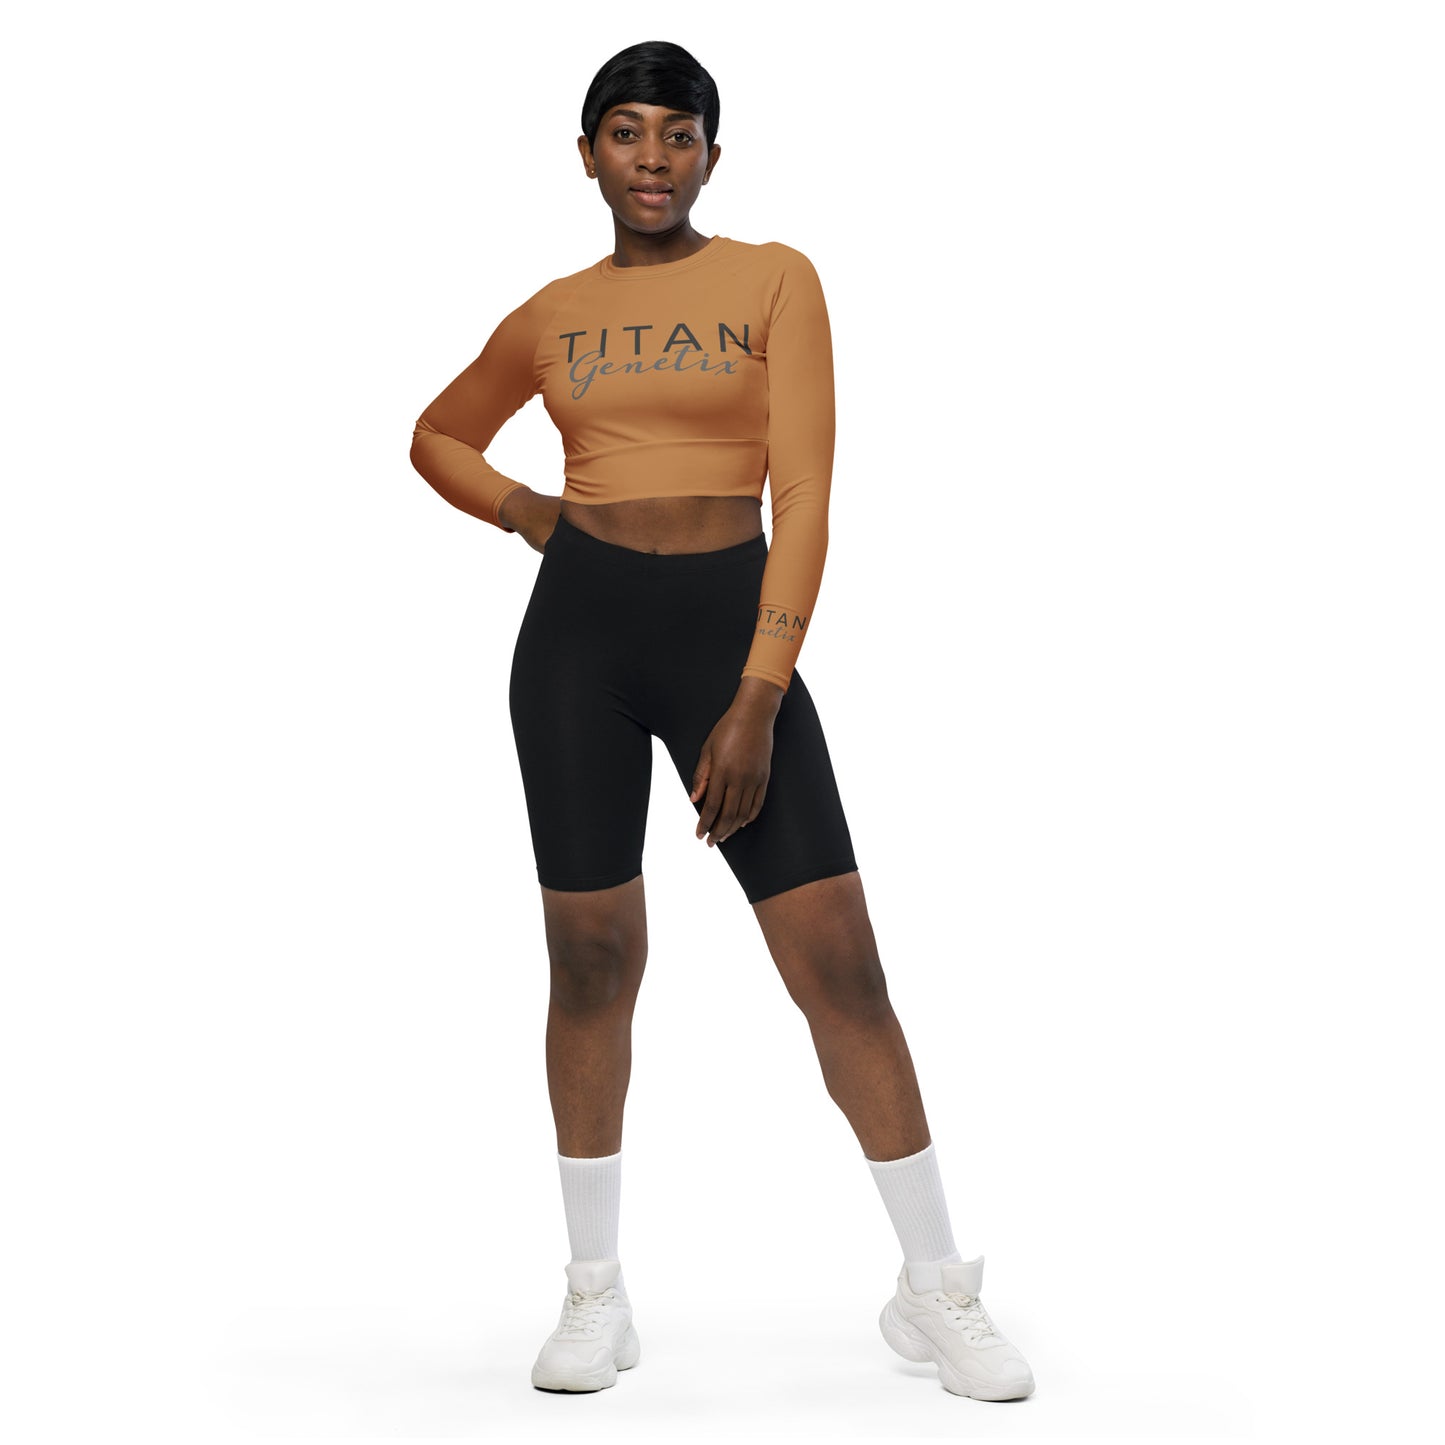 Titan Genetix Women's Signature - Long-Sleeve Crop Top